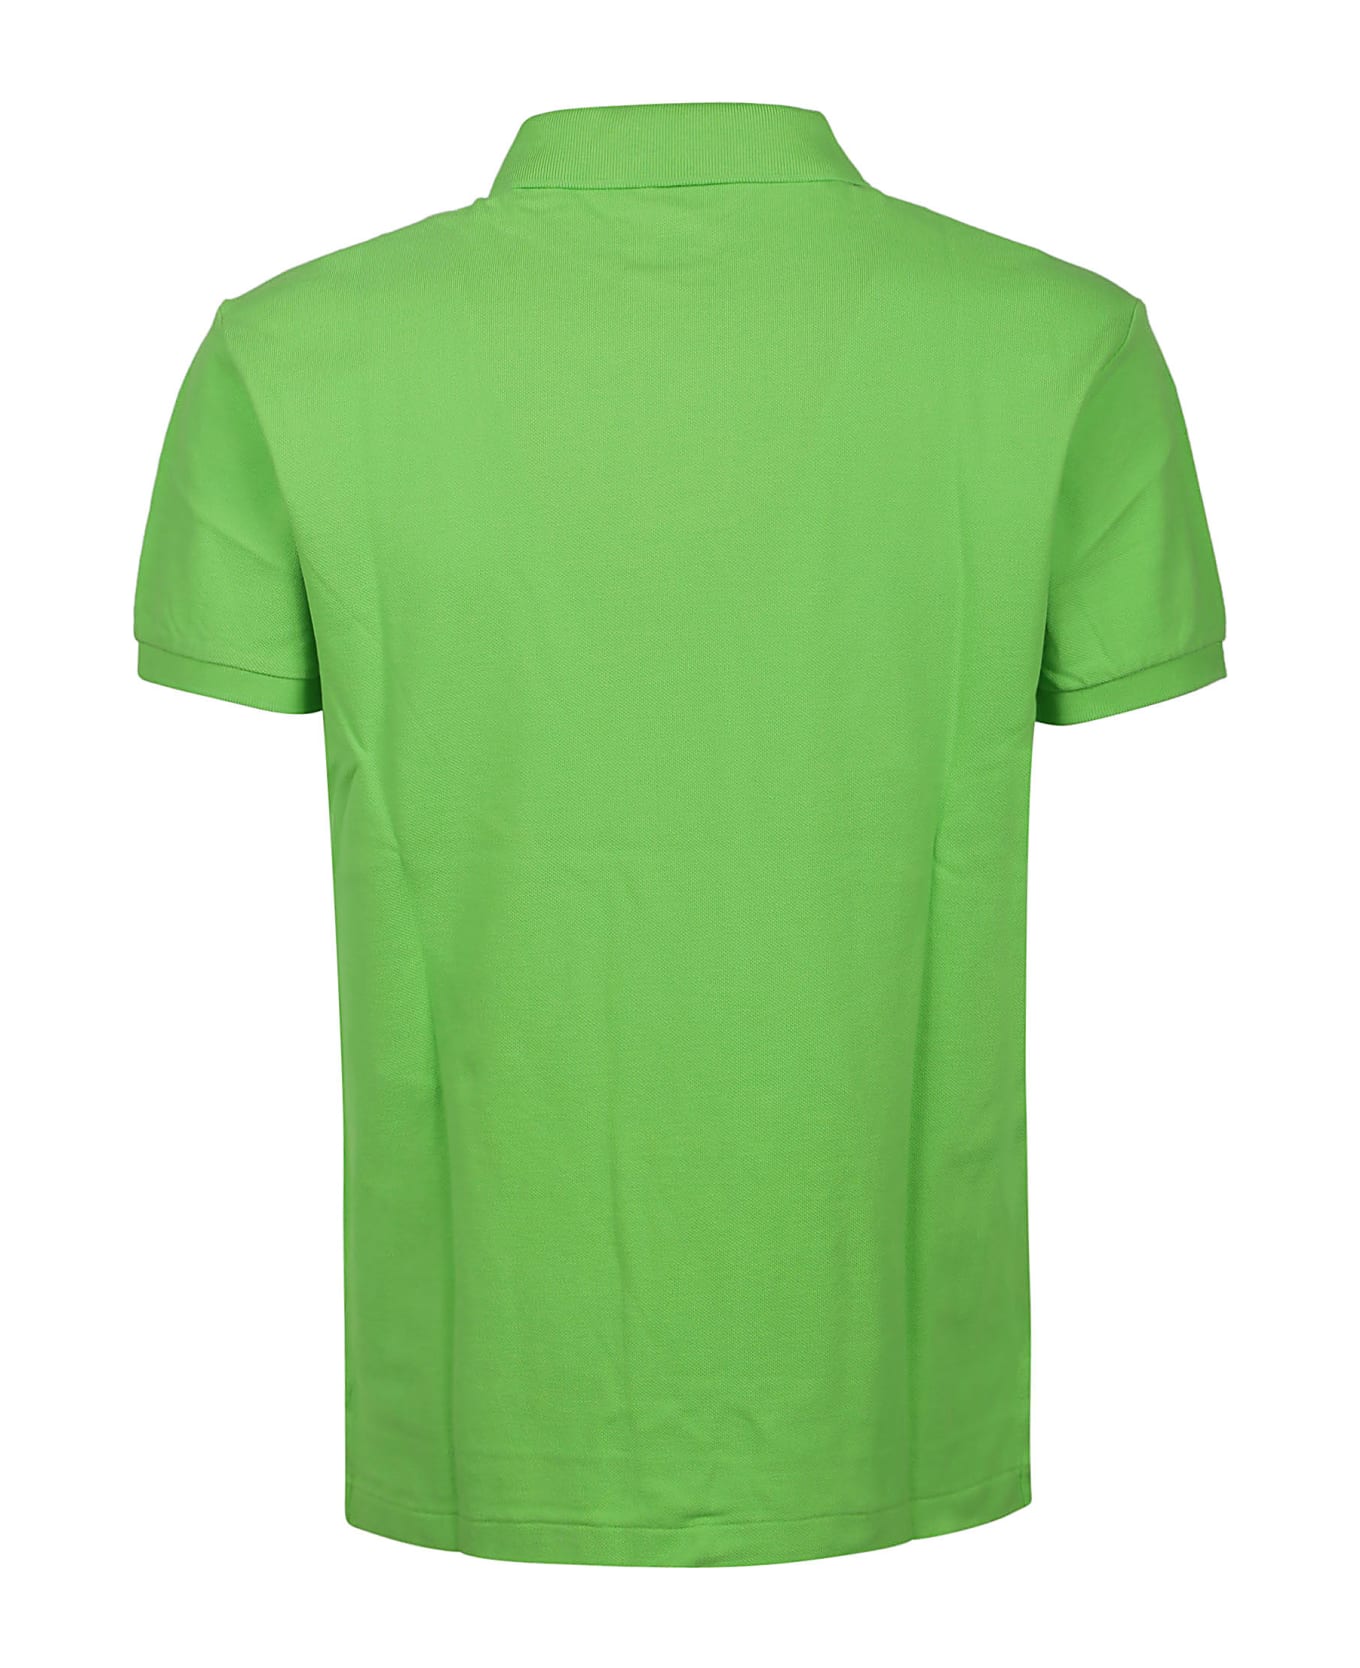 Polo Ralph Lauren Short Sleeve Polo Shirt - Galaxy Green